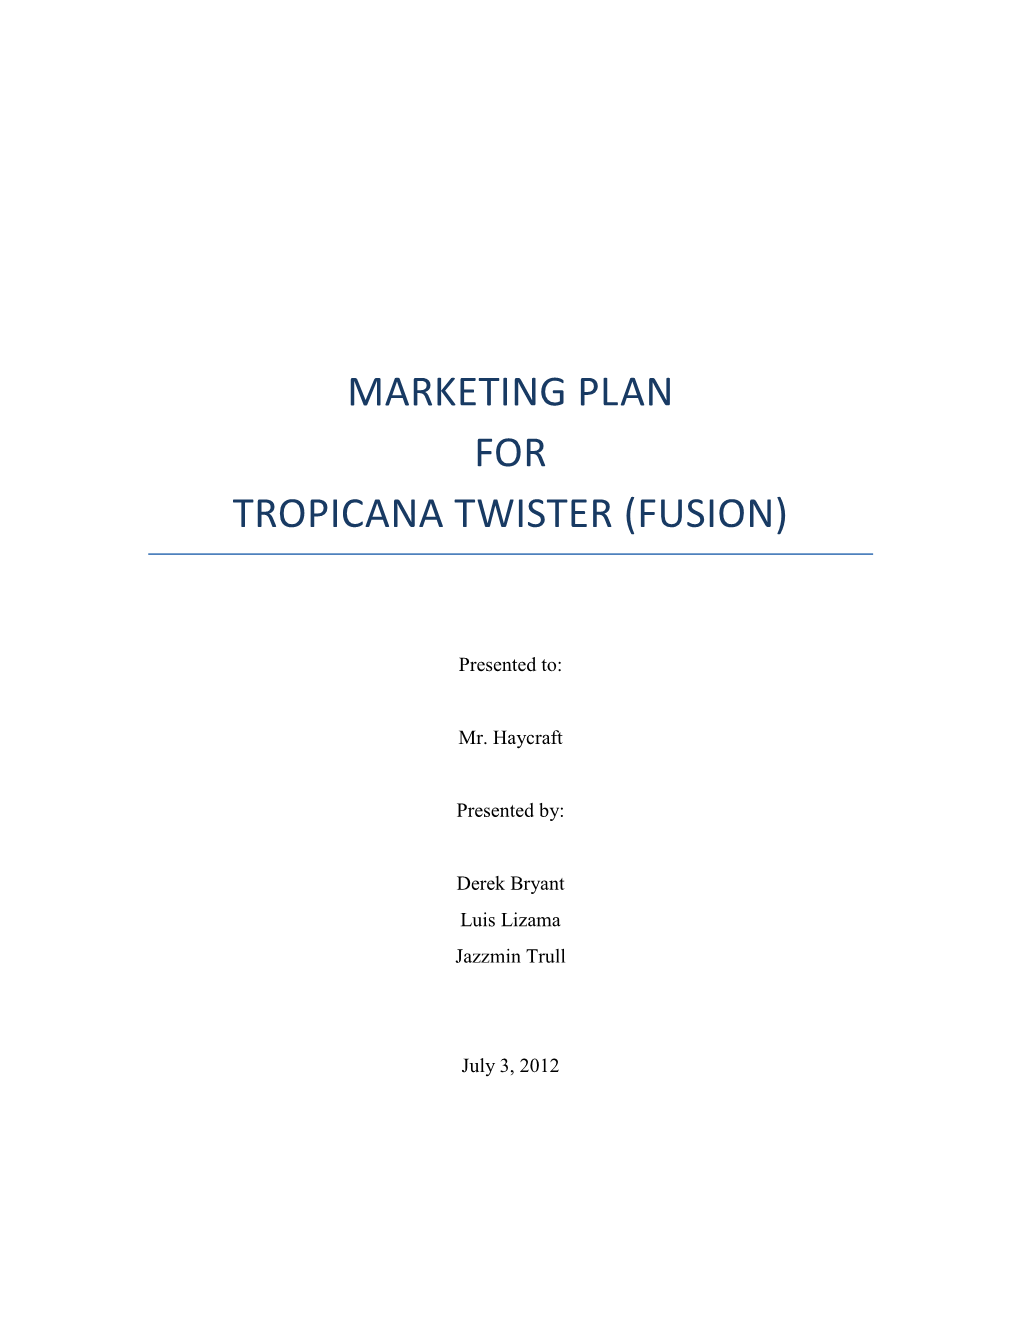 Marketing Plan for Tropicana Twister (Fusion)